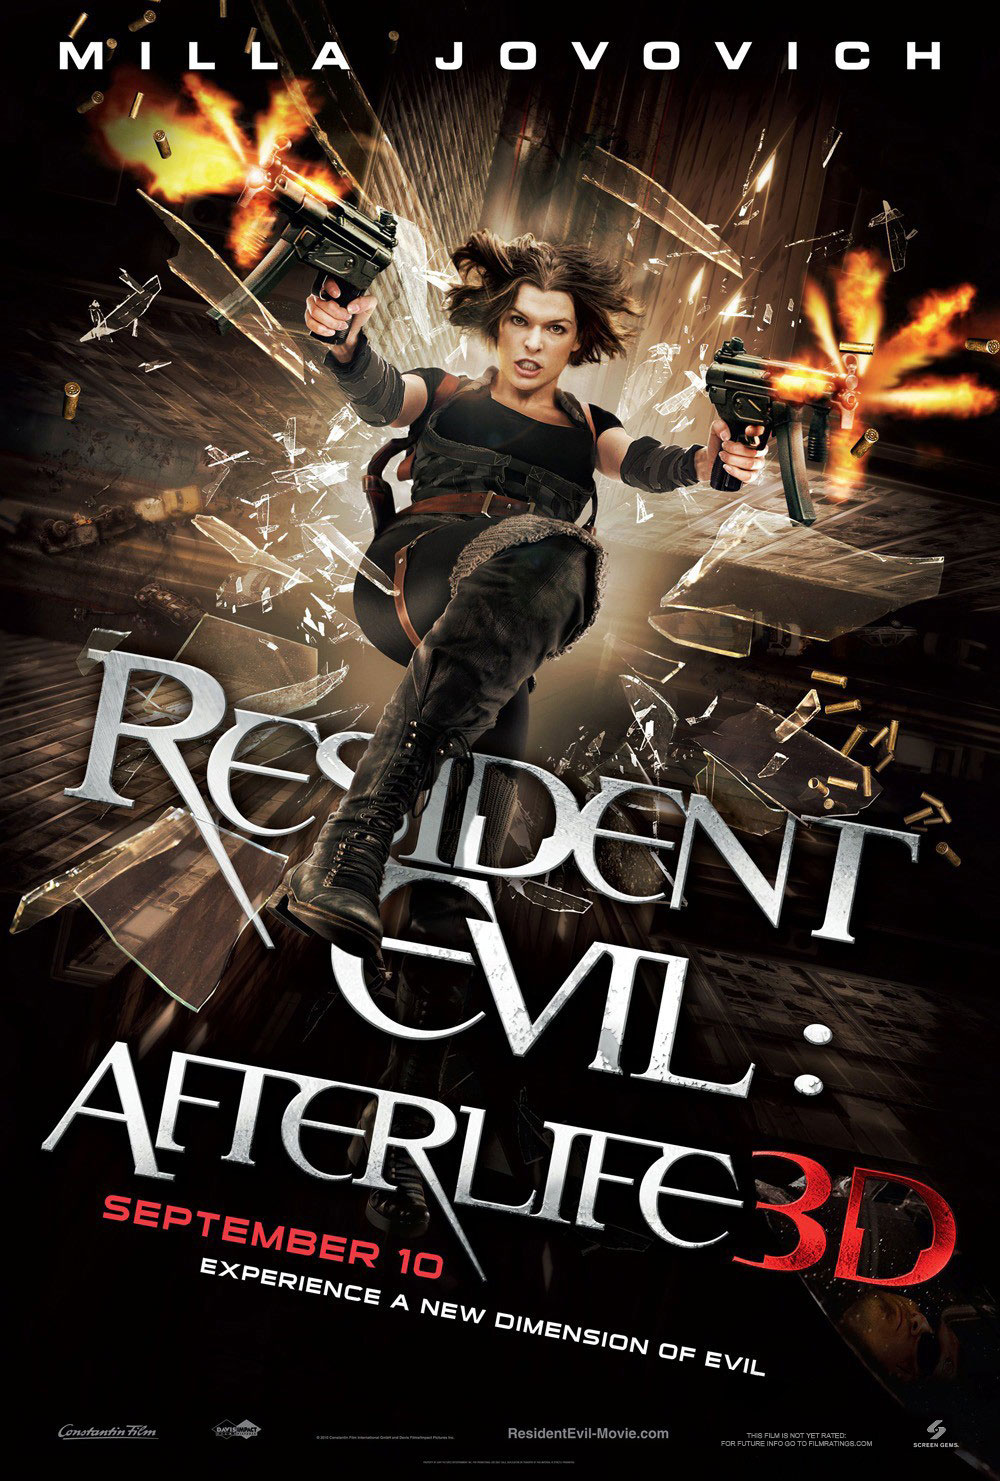 Category:CGI films, Resident Evil Wiki